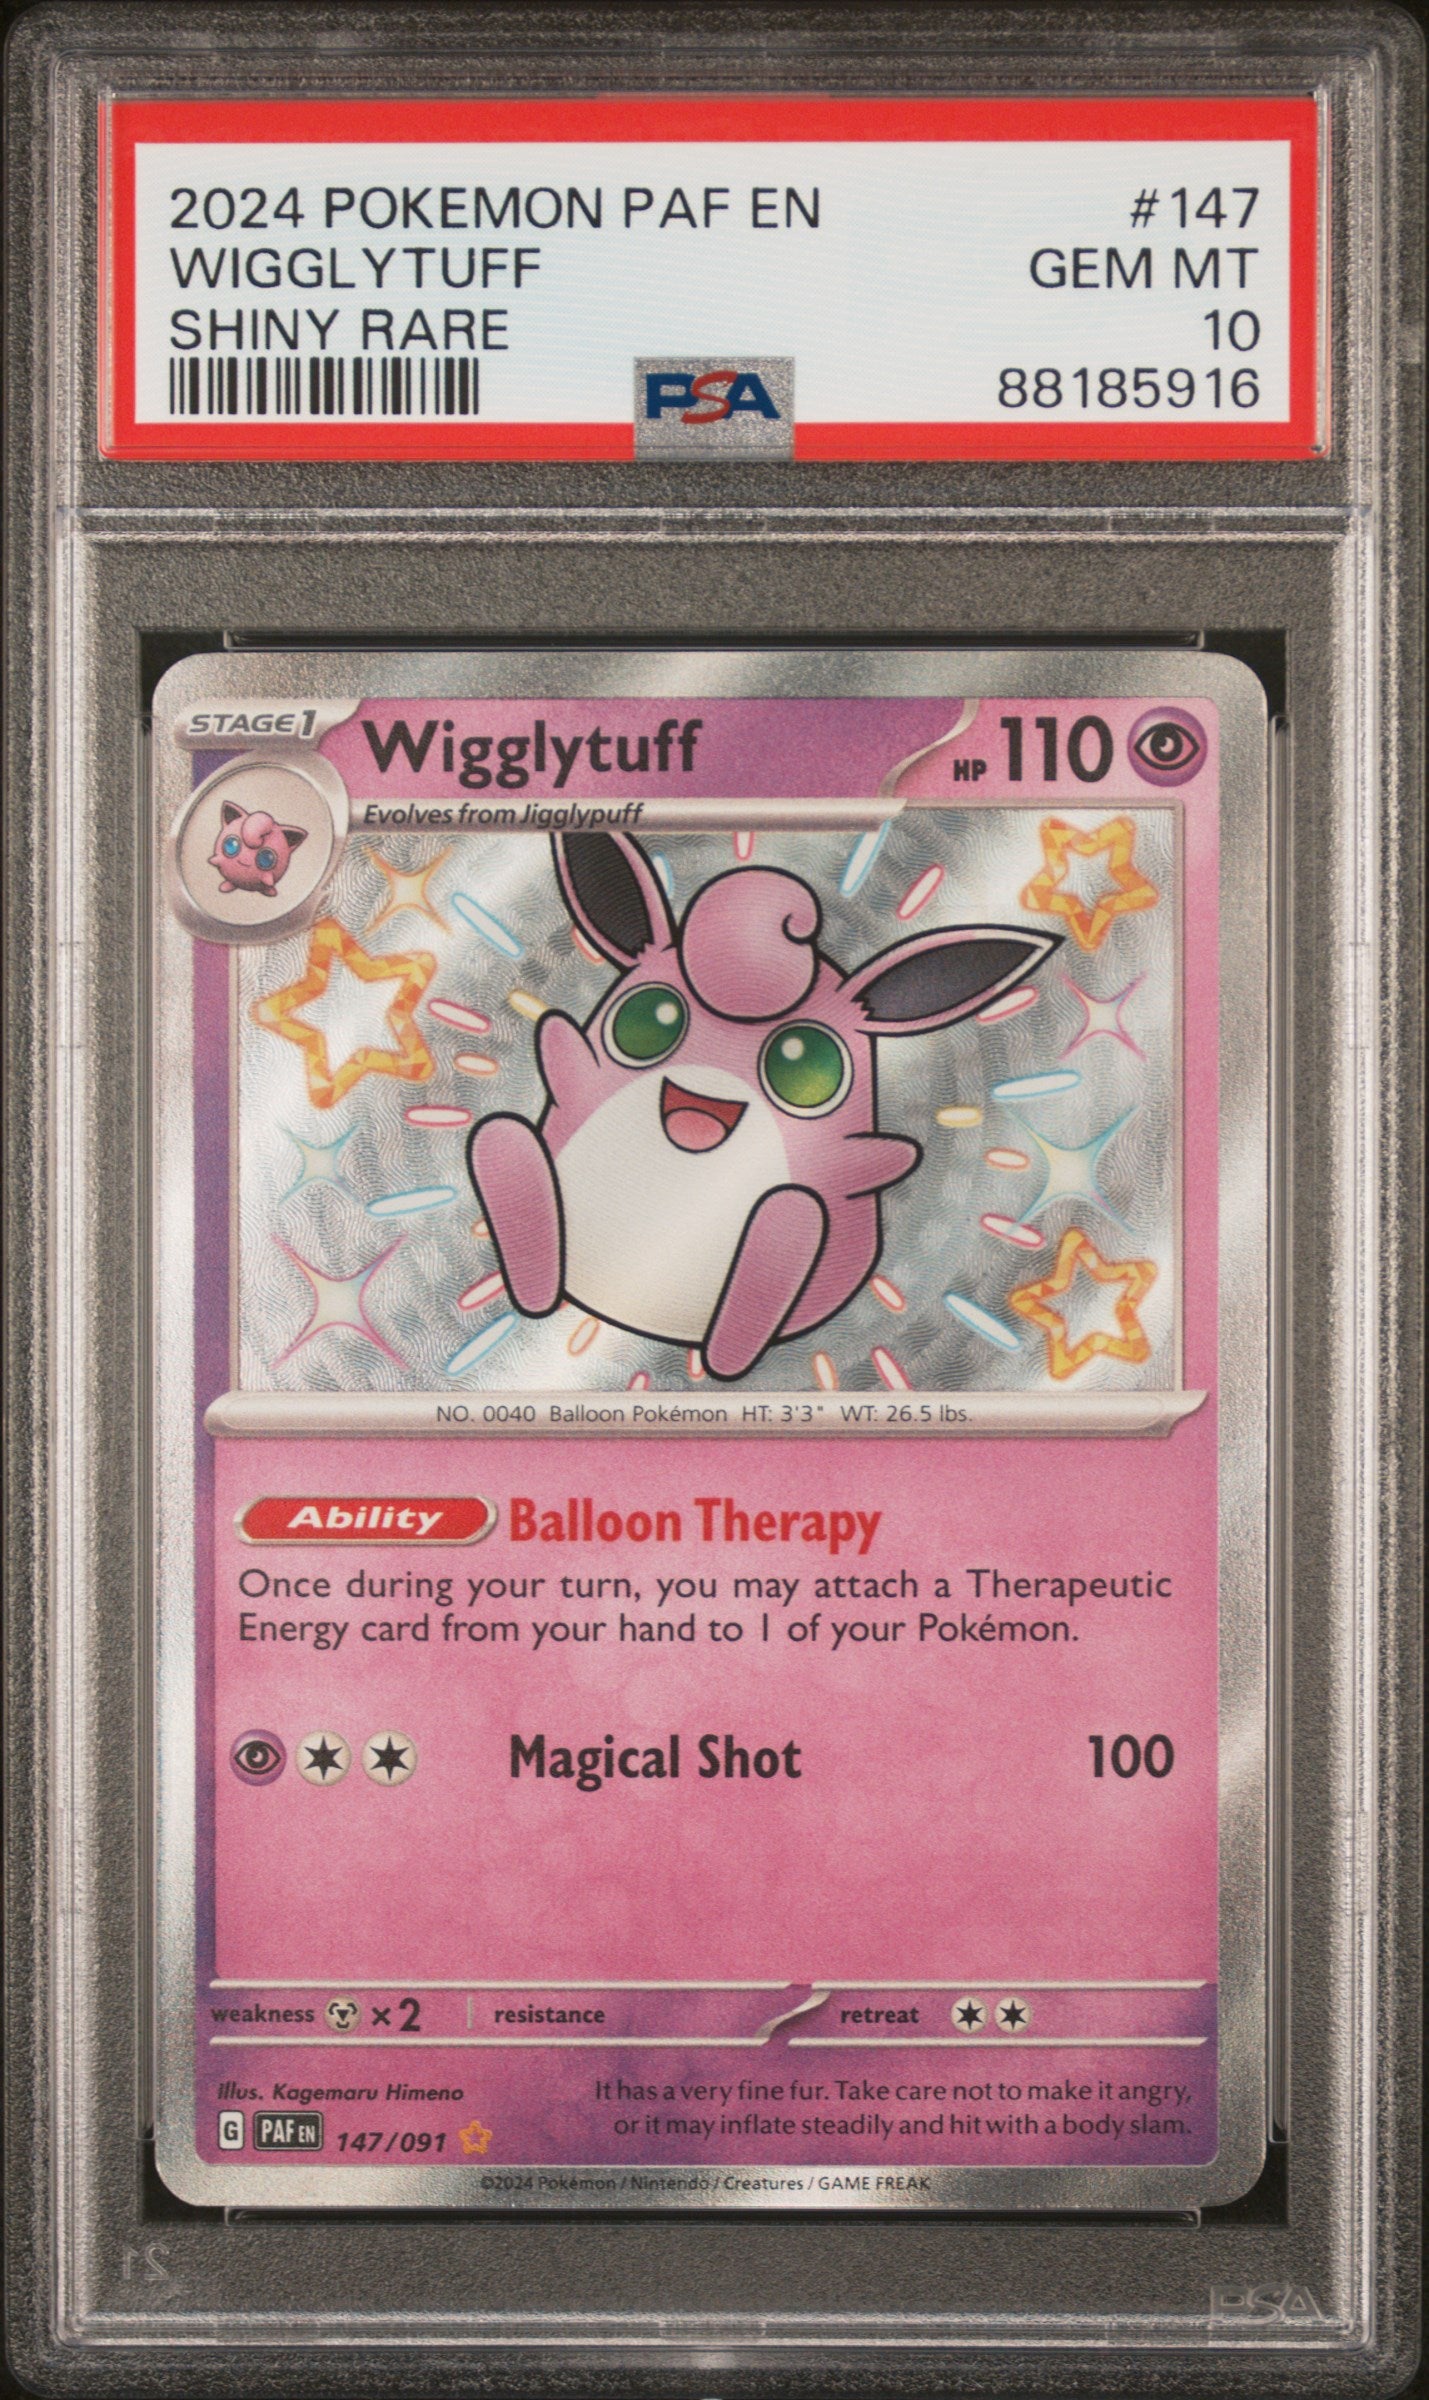 Pokémon - Wigglytuff Paldean Fates 147/091 (Shiny Rare) - PSA 10 (GEM-MINT)